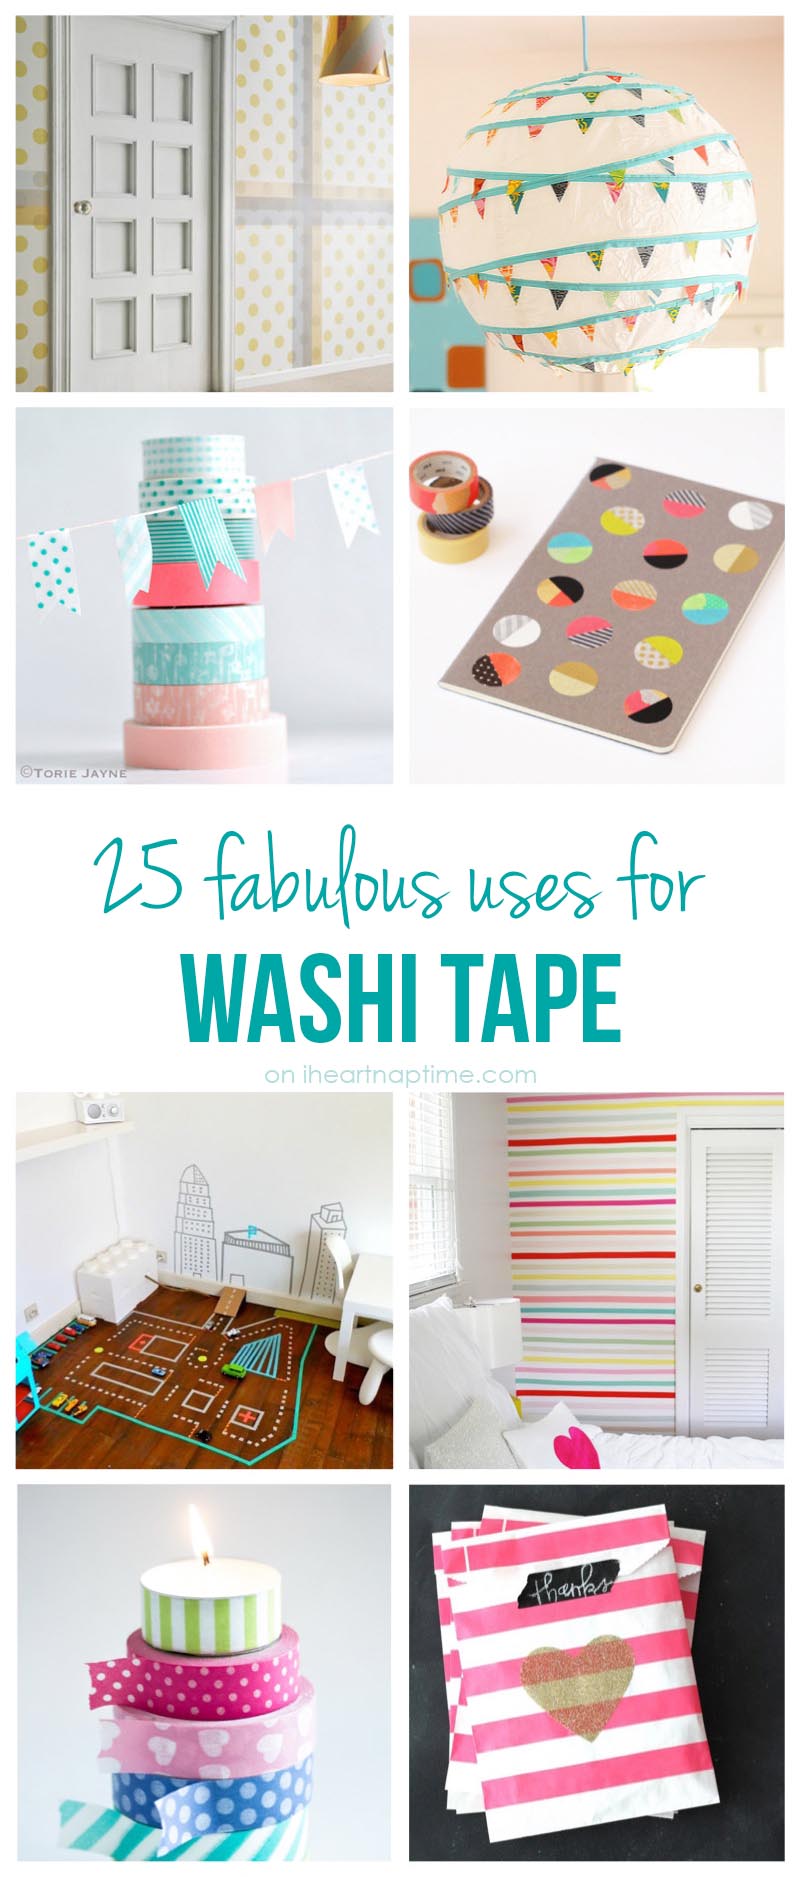 25-fabulous-uses-for-washi-tape